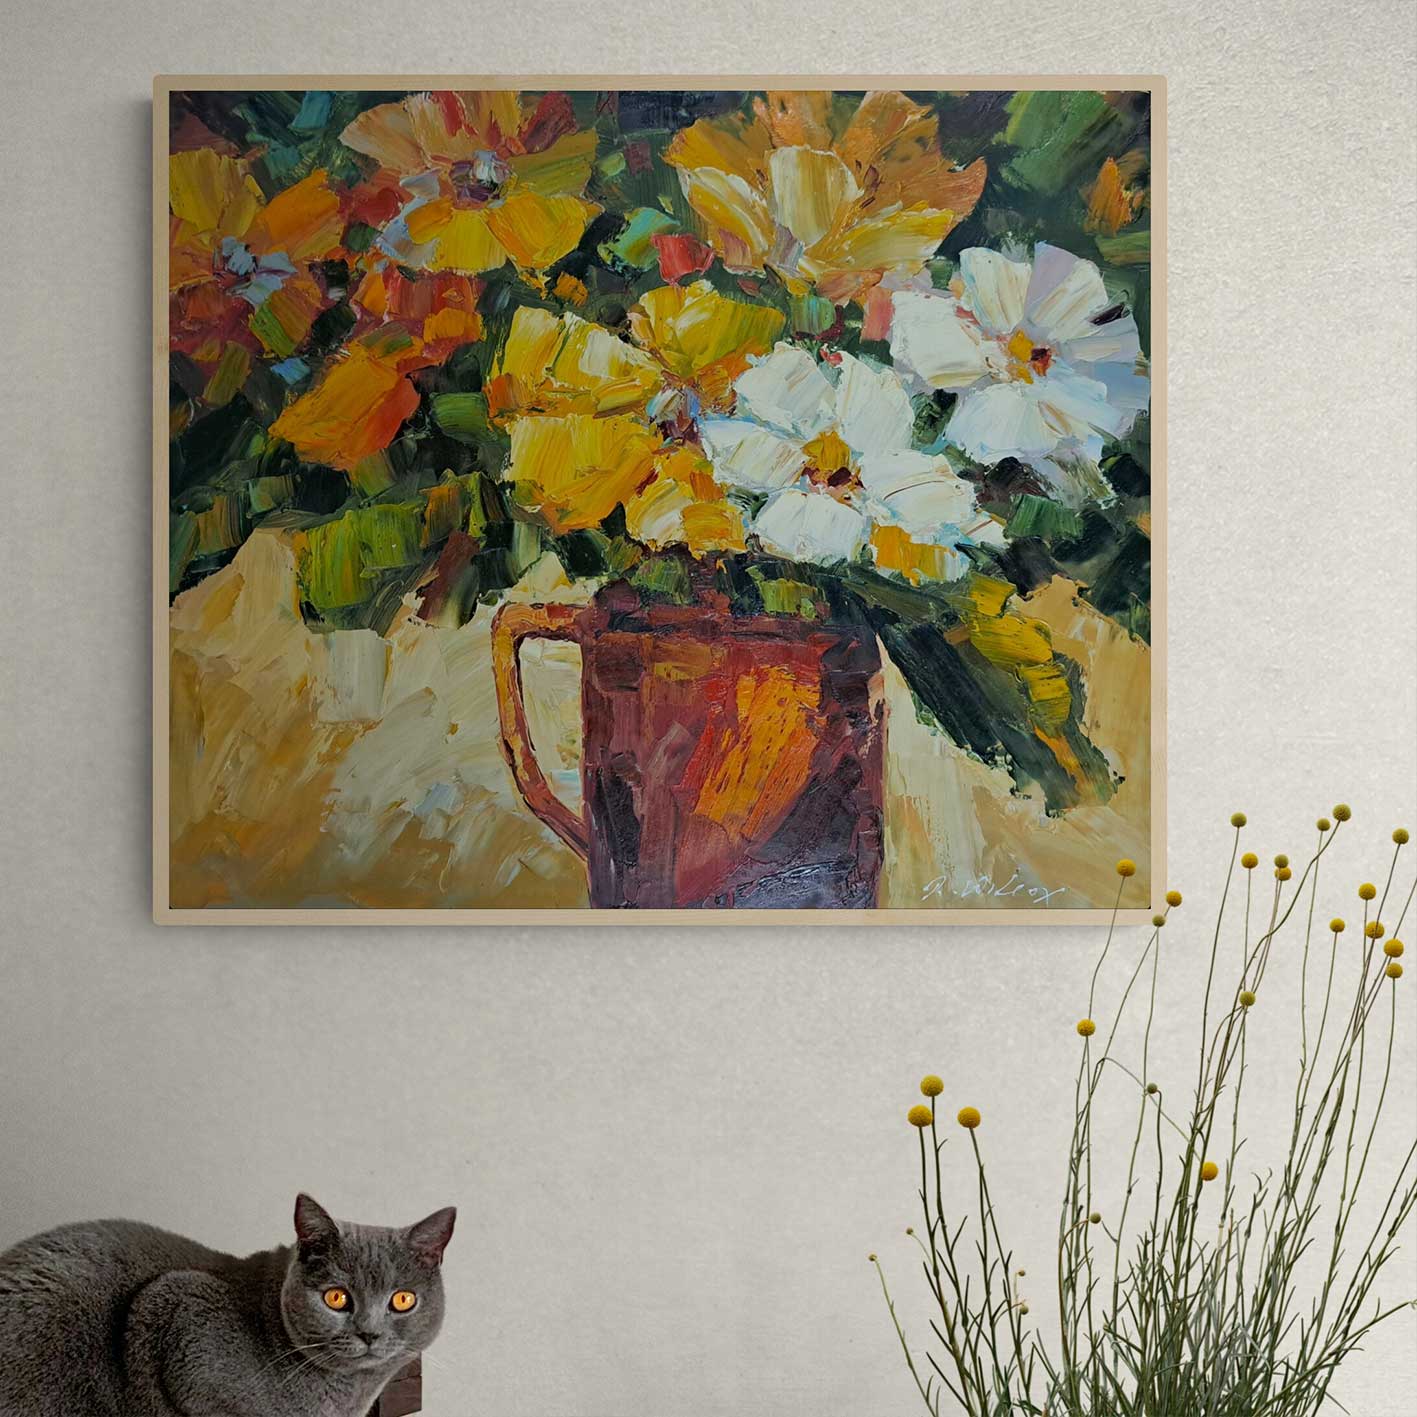 Volume Flowers Painting 60x50 cm